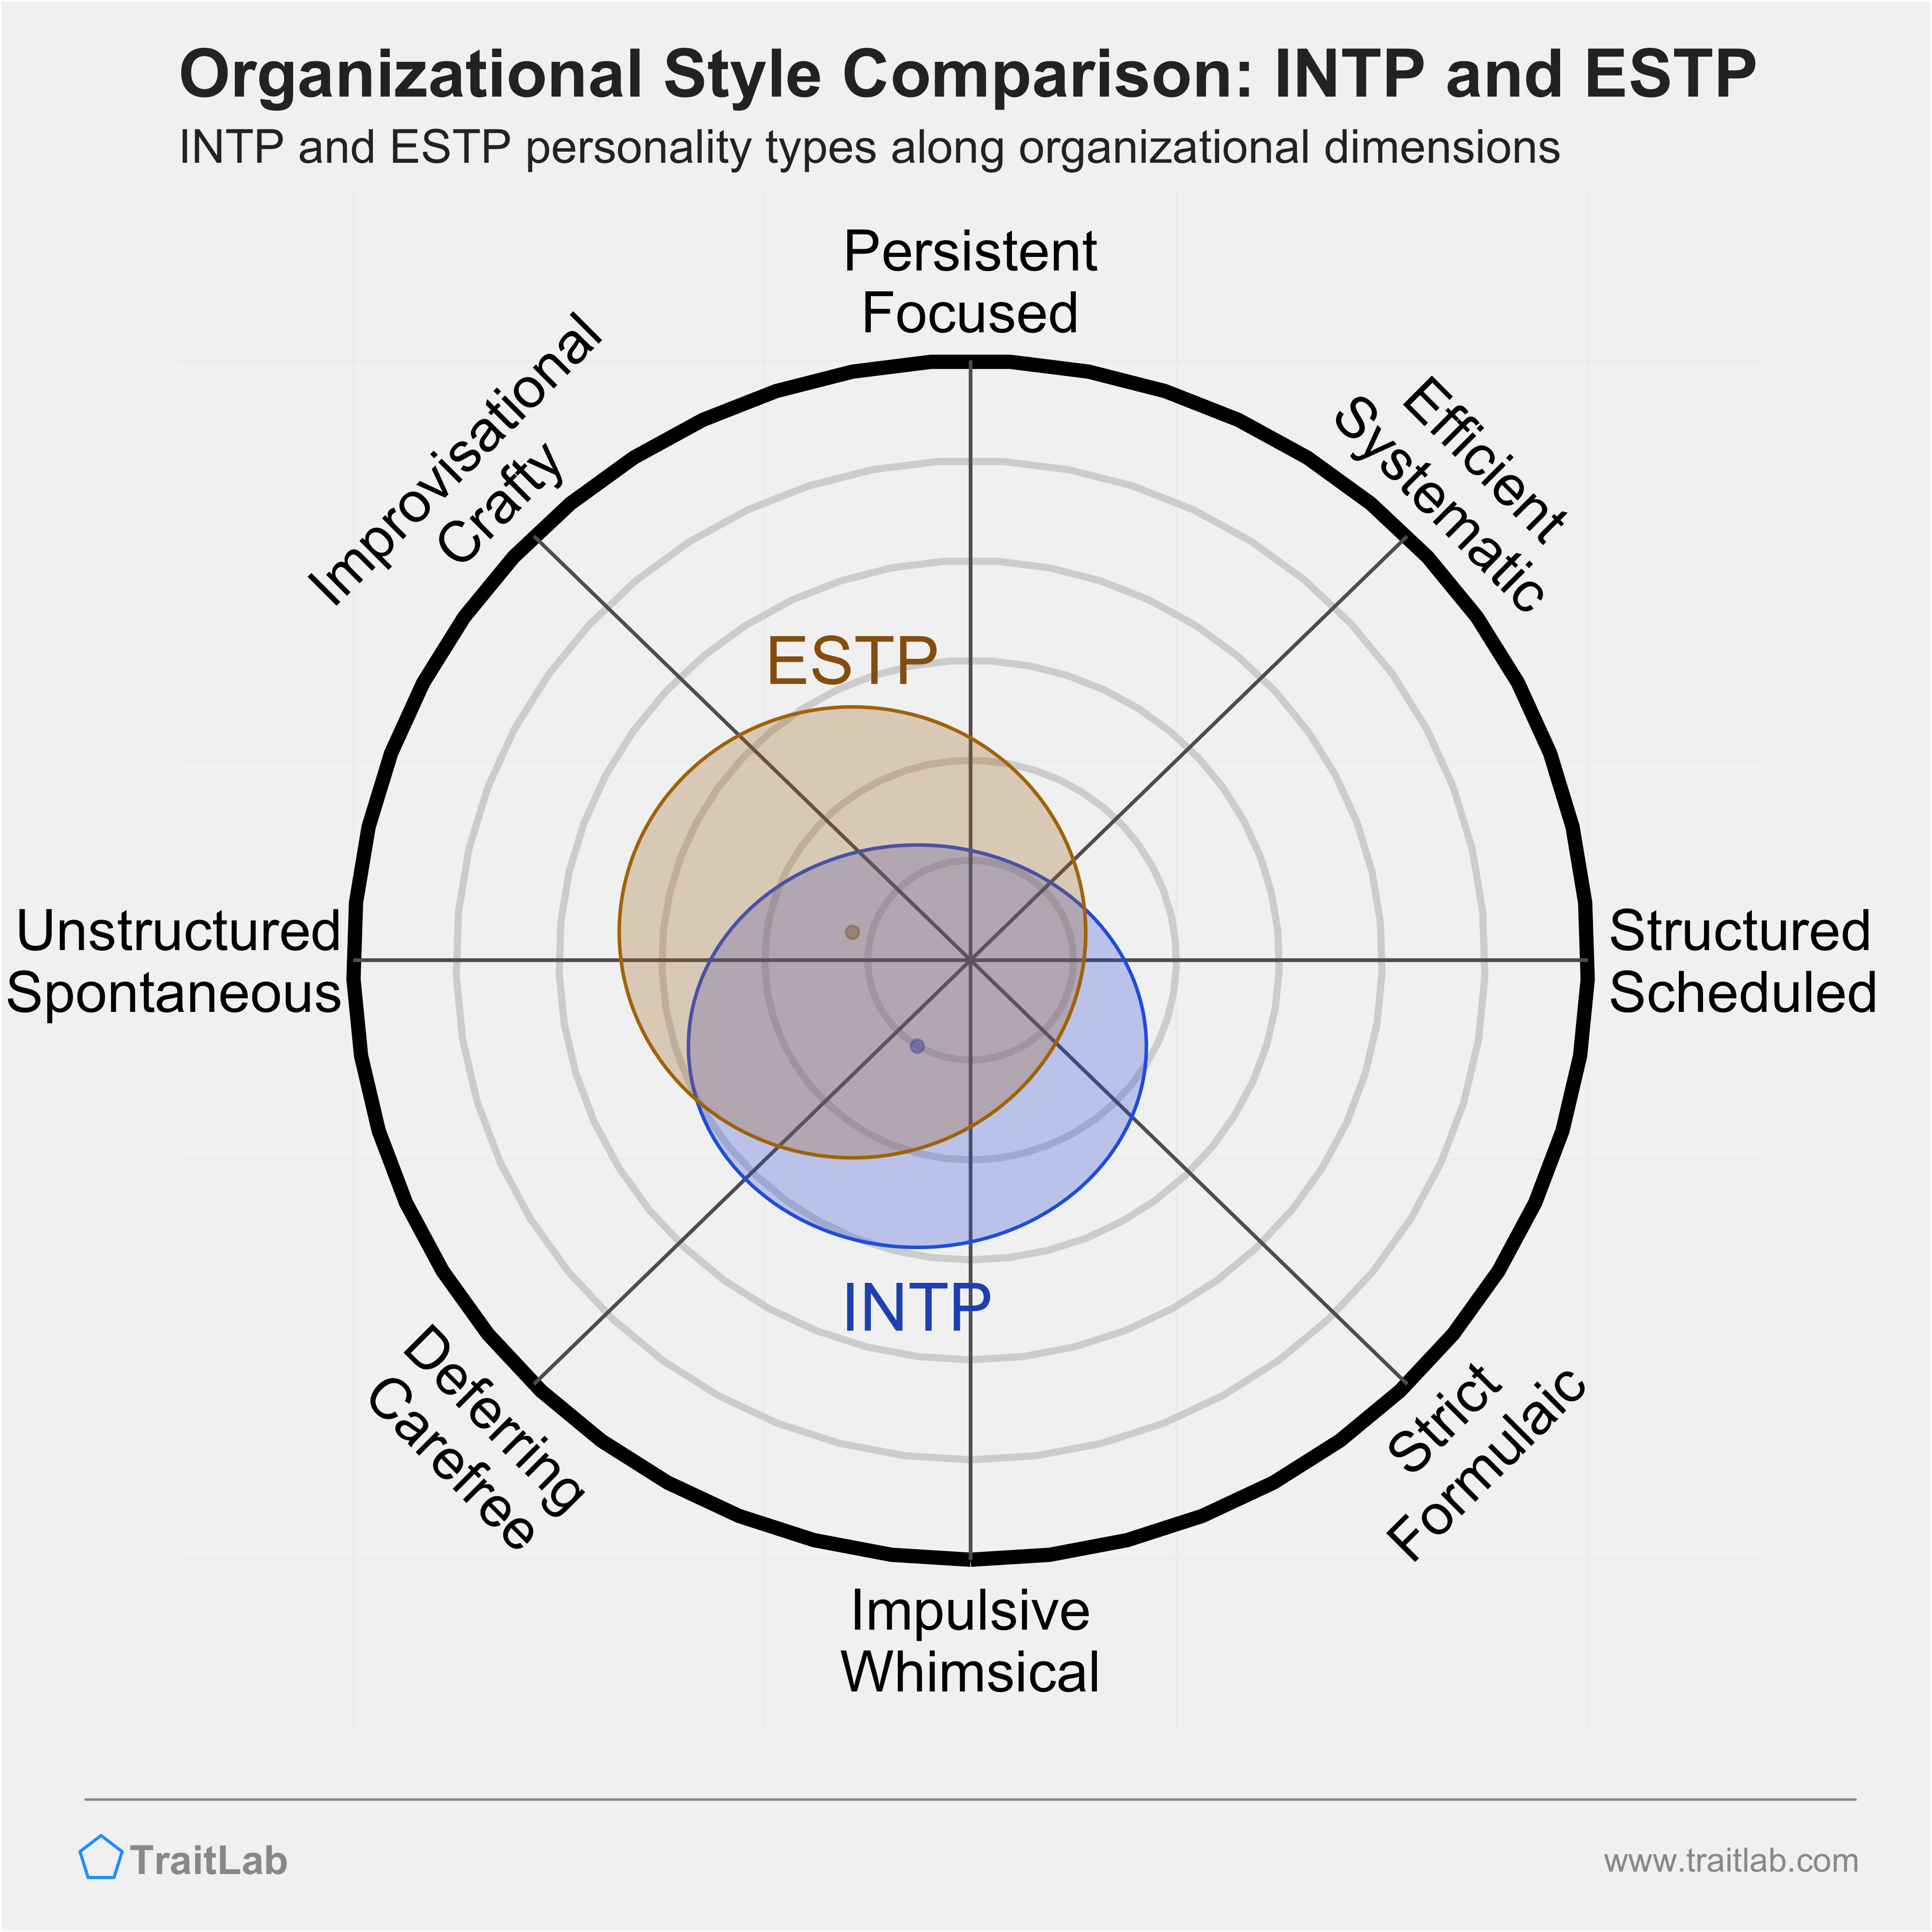 INTP and ESTP comparison across organizational dimensions